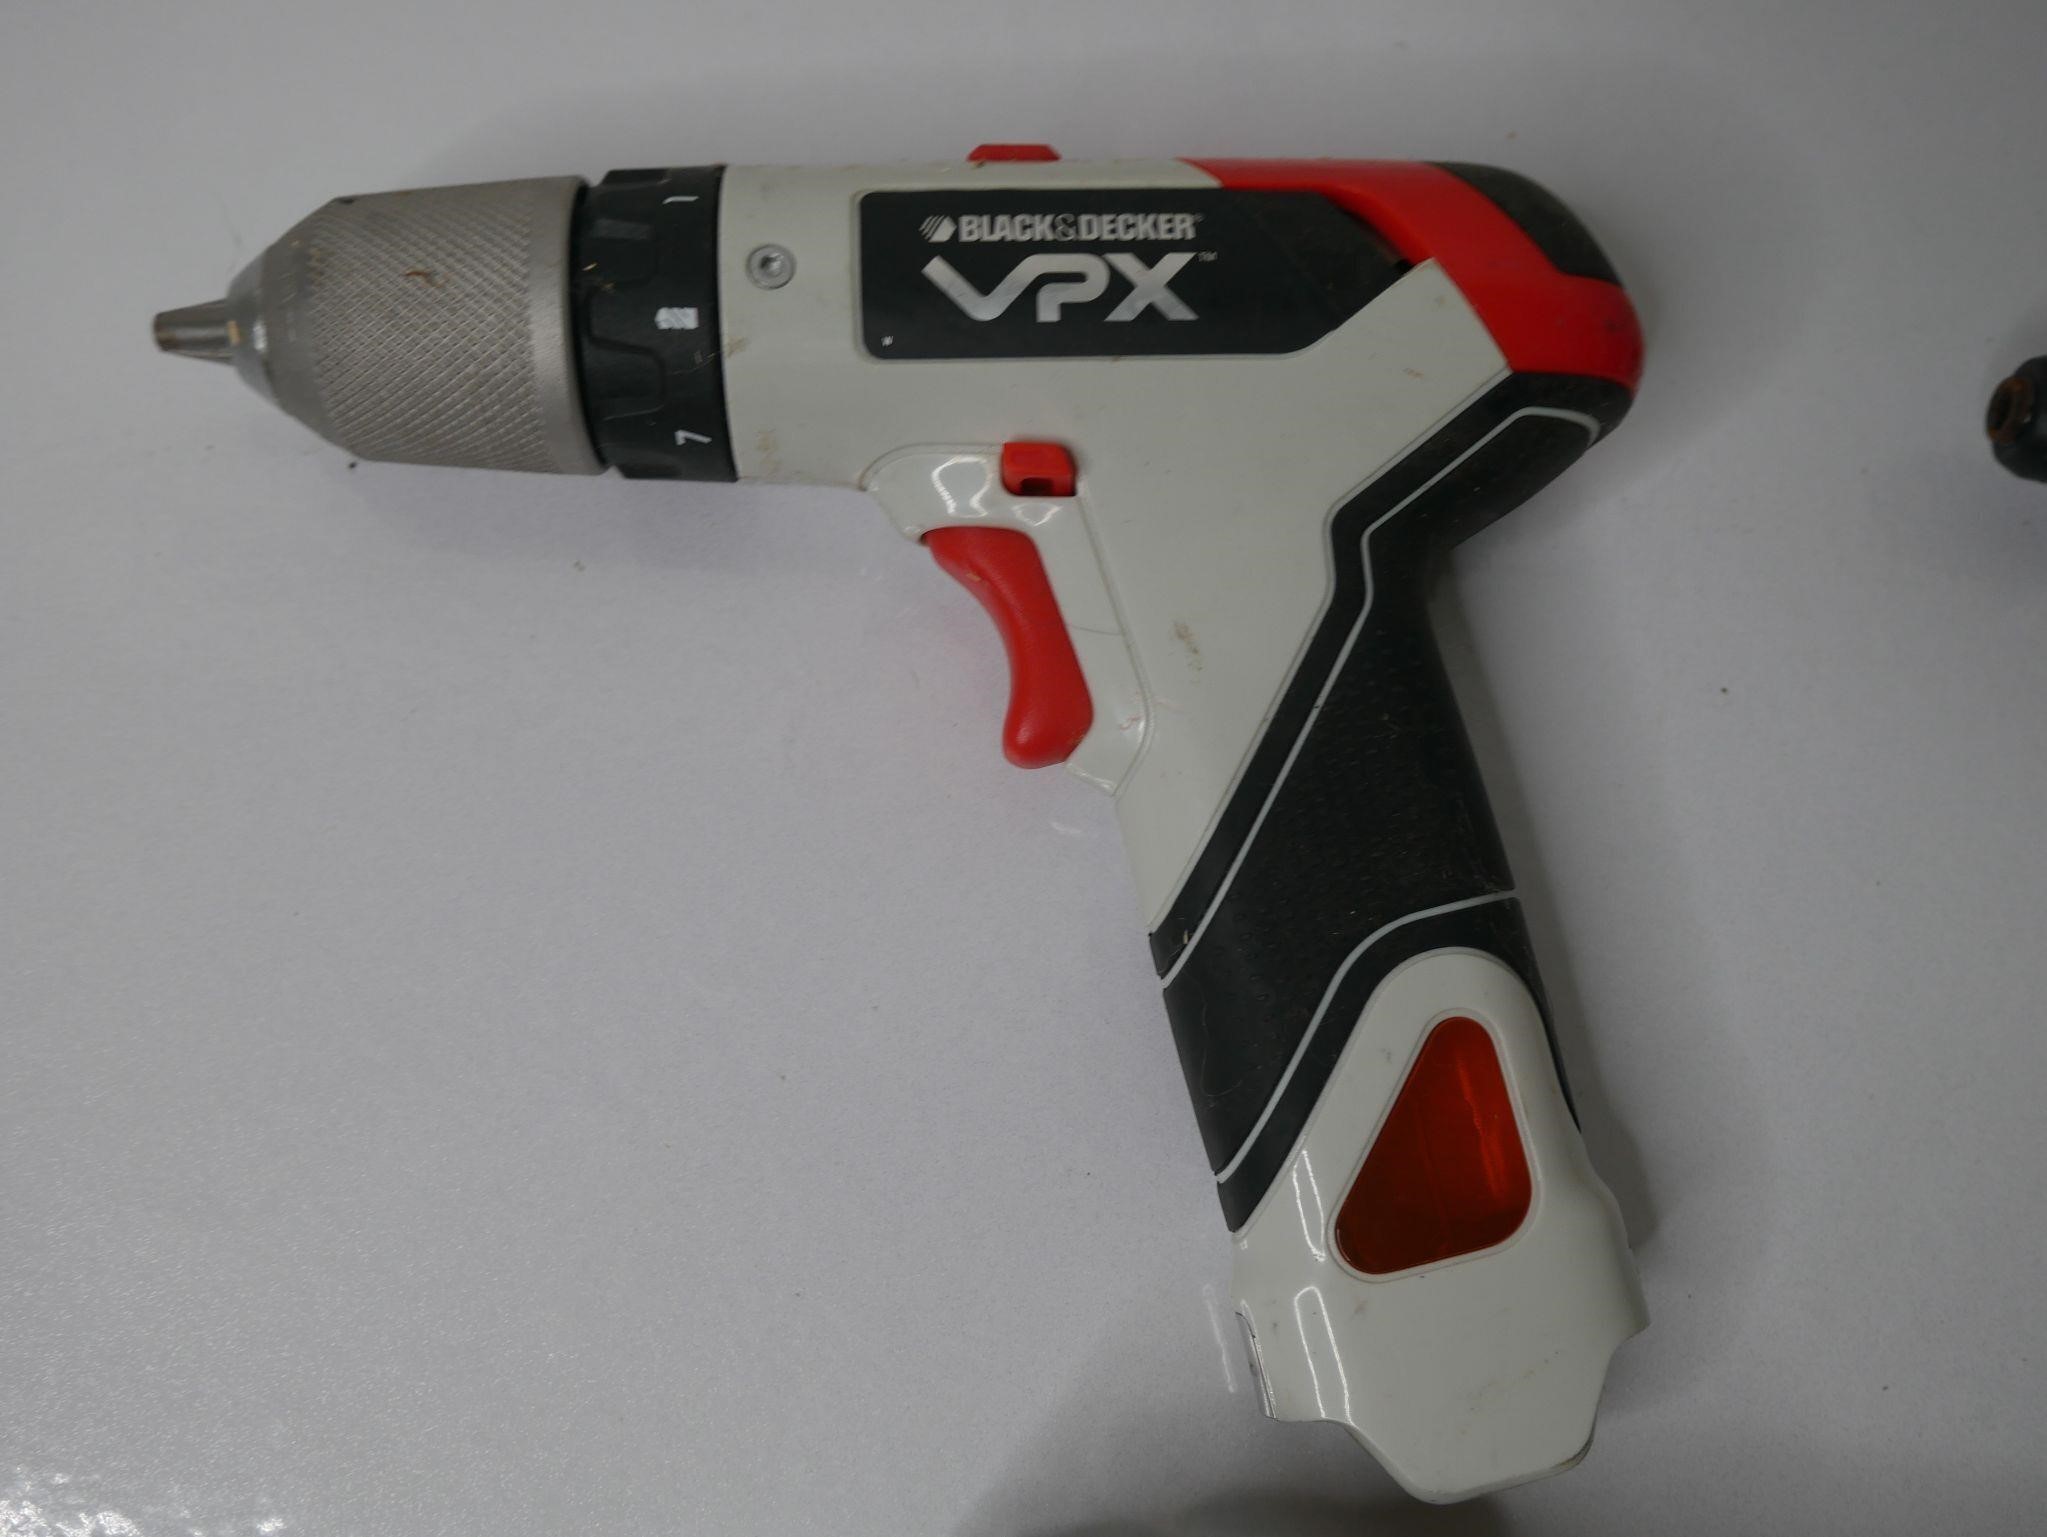 Black & Decker VPX tools